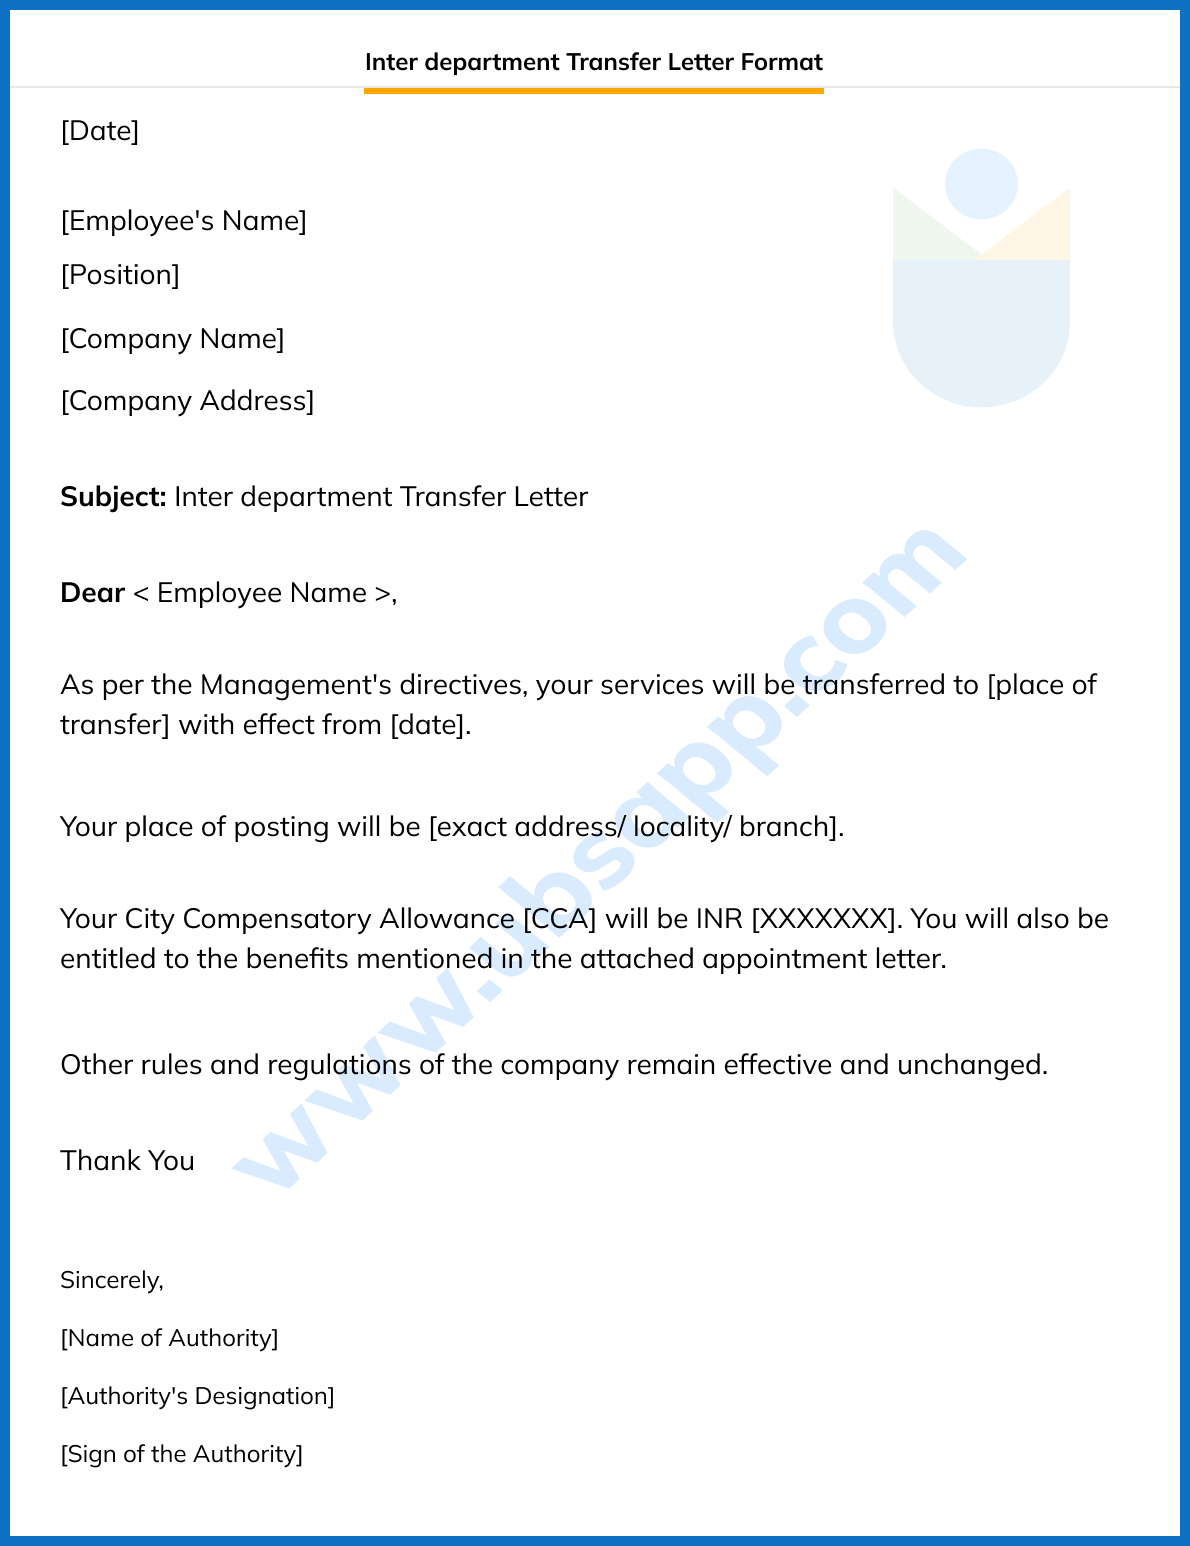 Inter department Transfer Letter Format